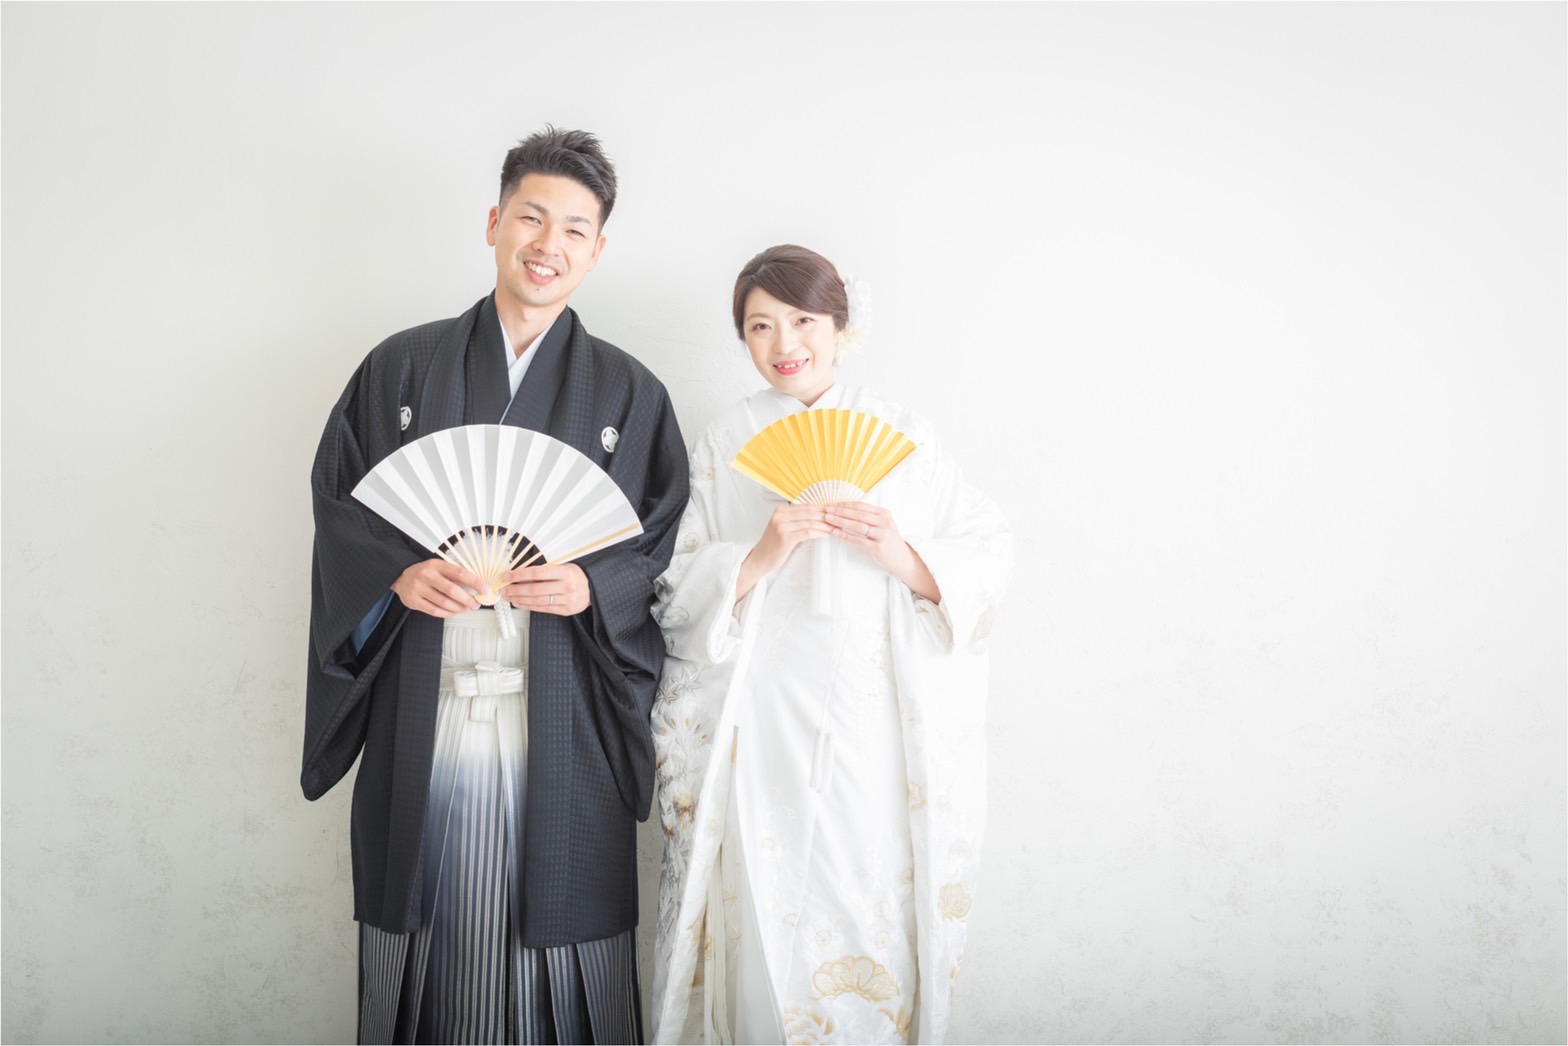 REAL BRIDES】日本女性の憧れ、白無垢でフォトウェディング 